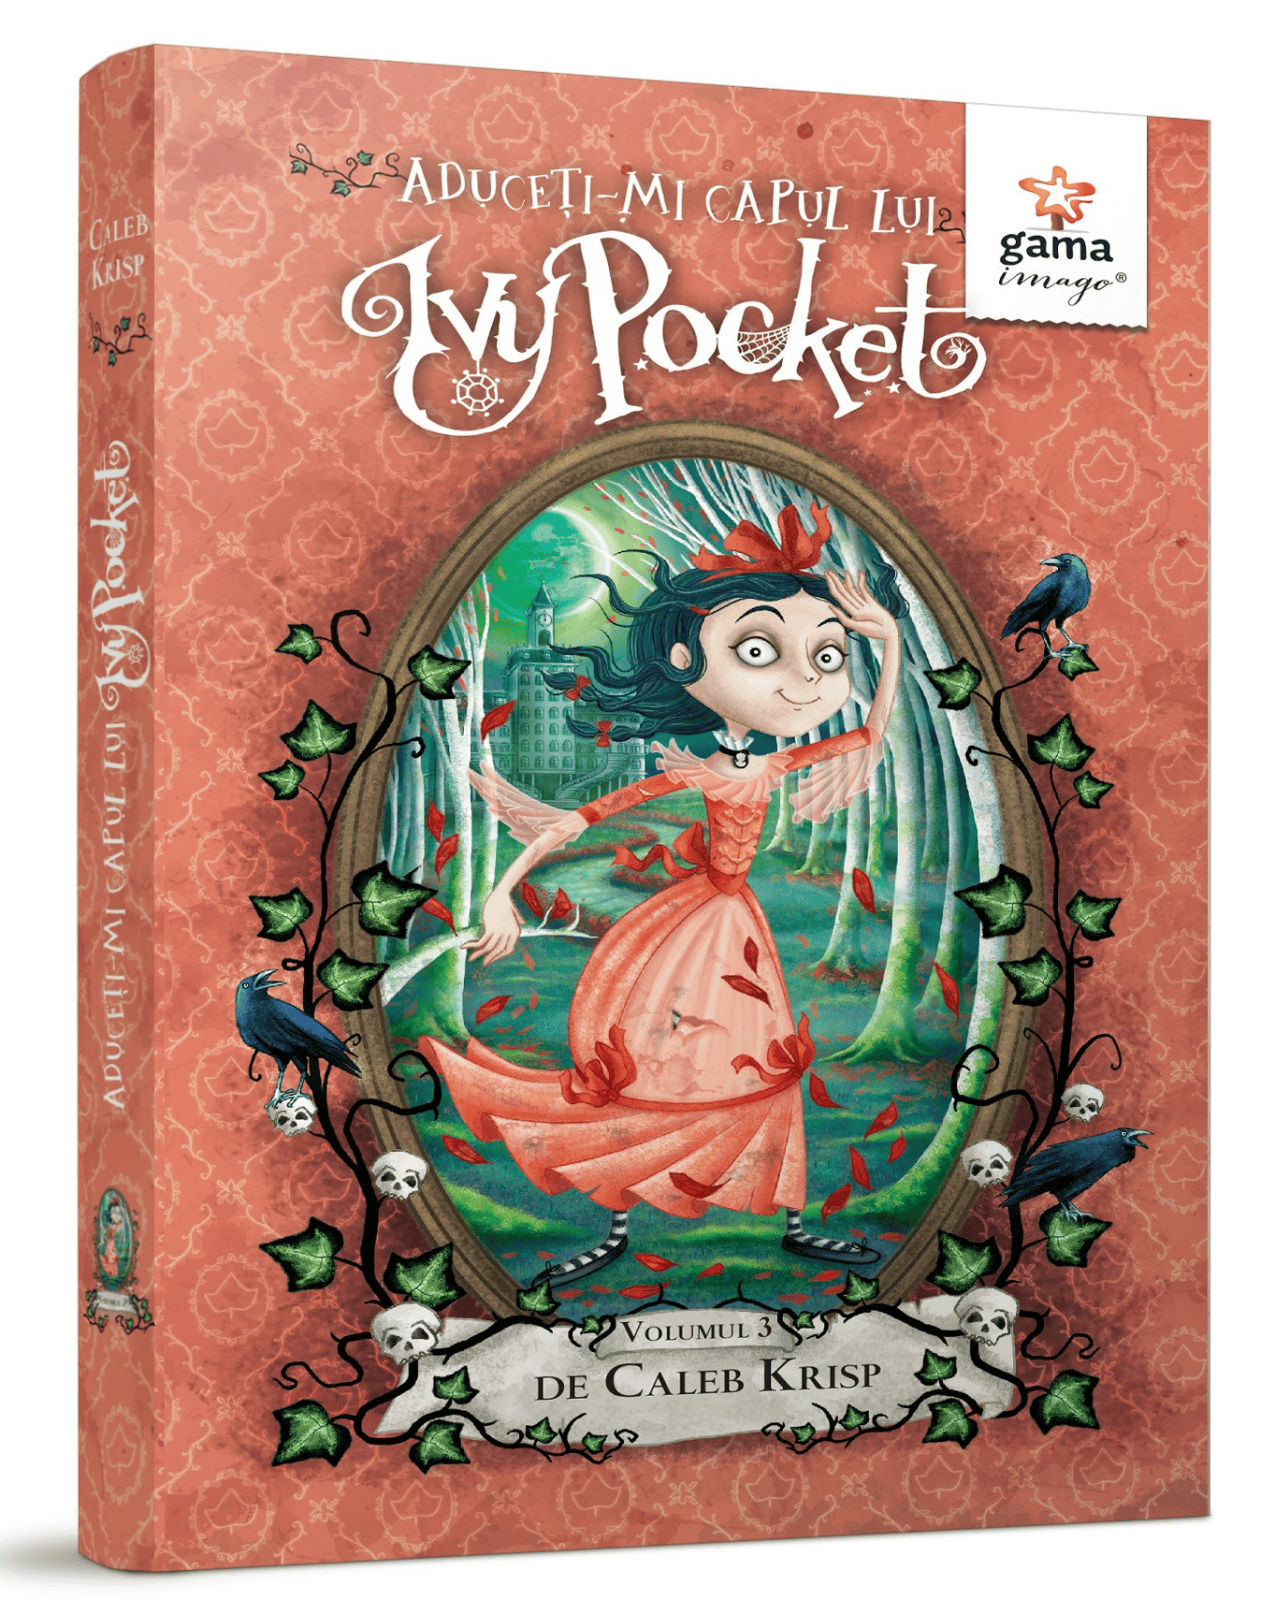 Aduceti-mi capul lui Ivy Pocket! - volumul 3, Editura Gama, 8-9 ani +